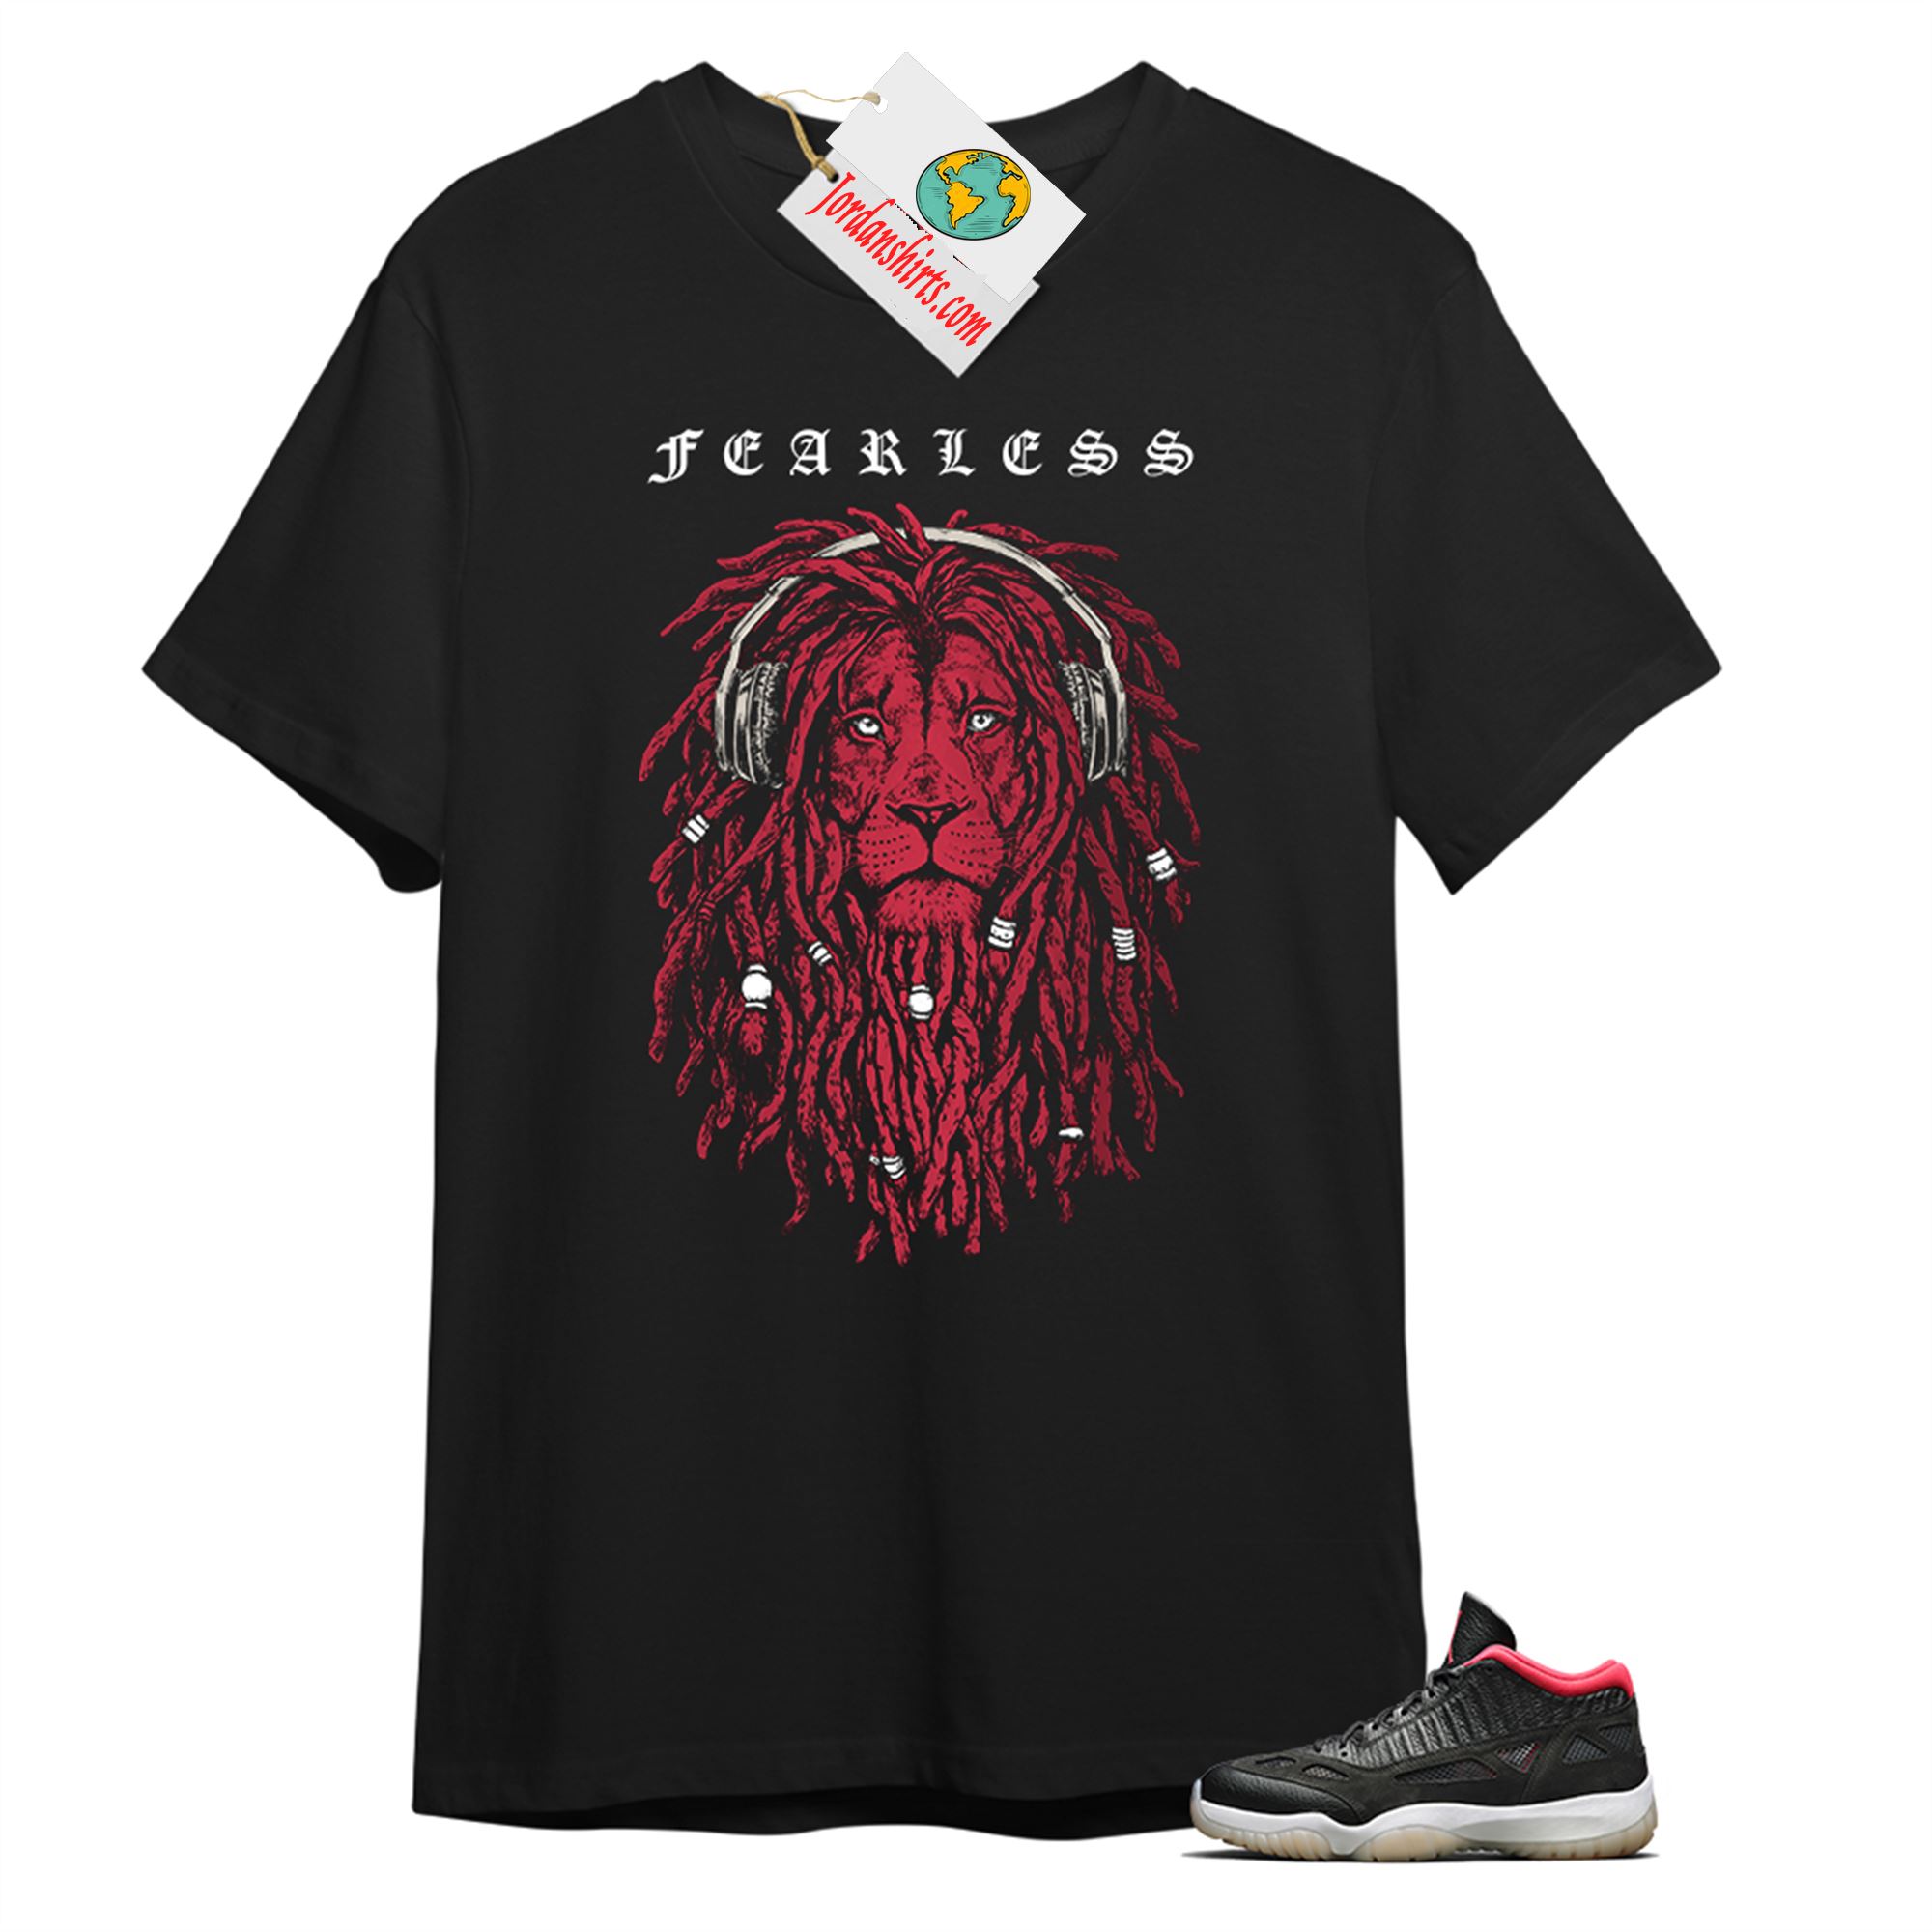 Jordan 11 Shirt, Fearless Lion Black T-shirt Air Jordan 11 Bred 11s Size Up To 5xl